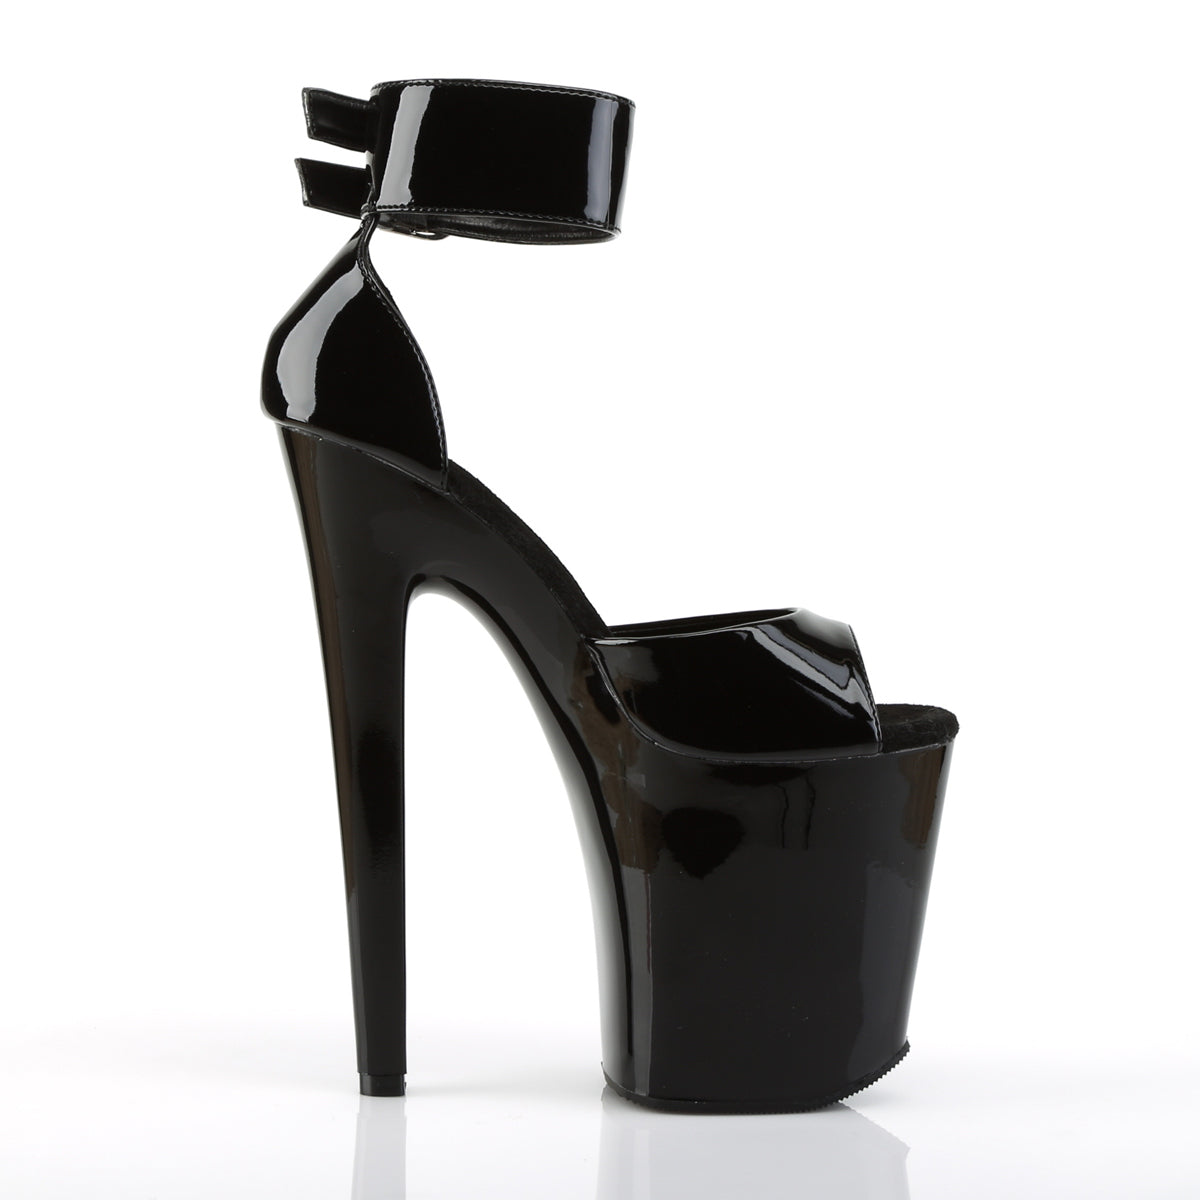 XTREME-875 8" Heel Black Patent Pole Dancing Platforms Shoes-Pleaser- Sexy Shoes Fetish Heels